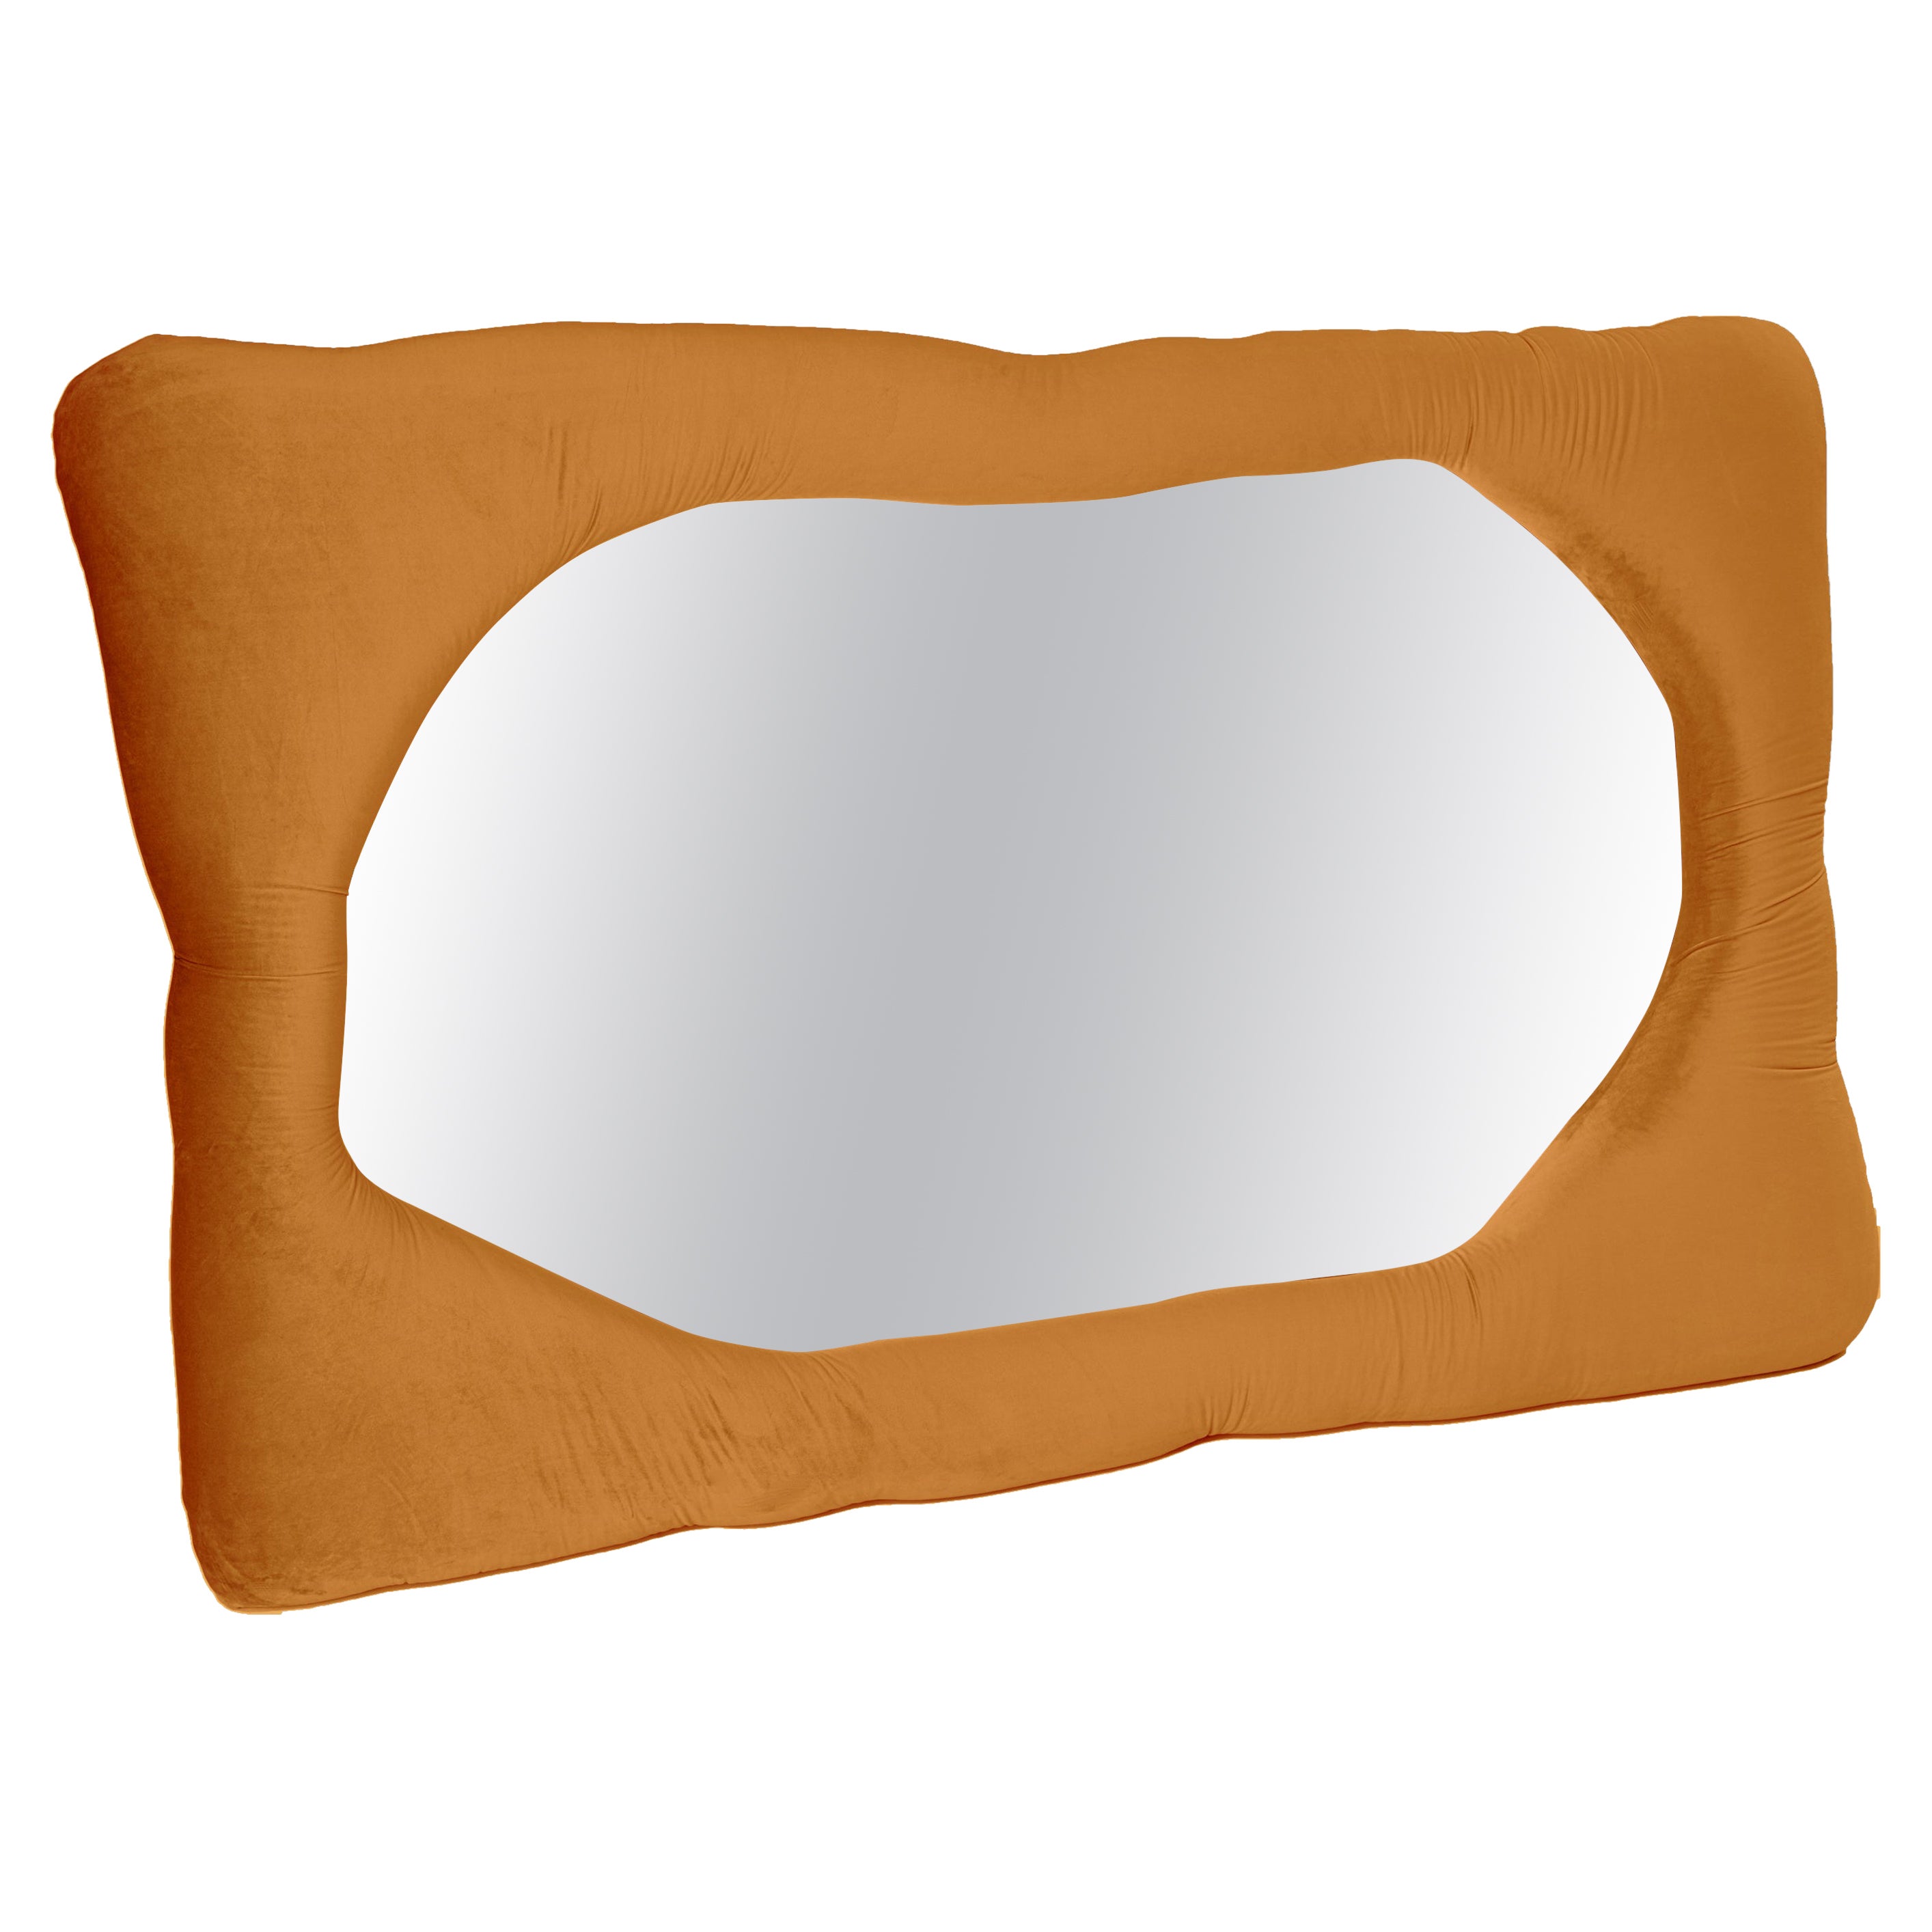 Miroir biomorphique en velours orange de Brandi Howe, REP de Tuleste Factory